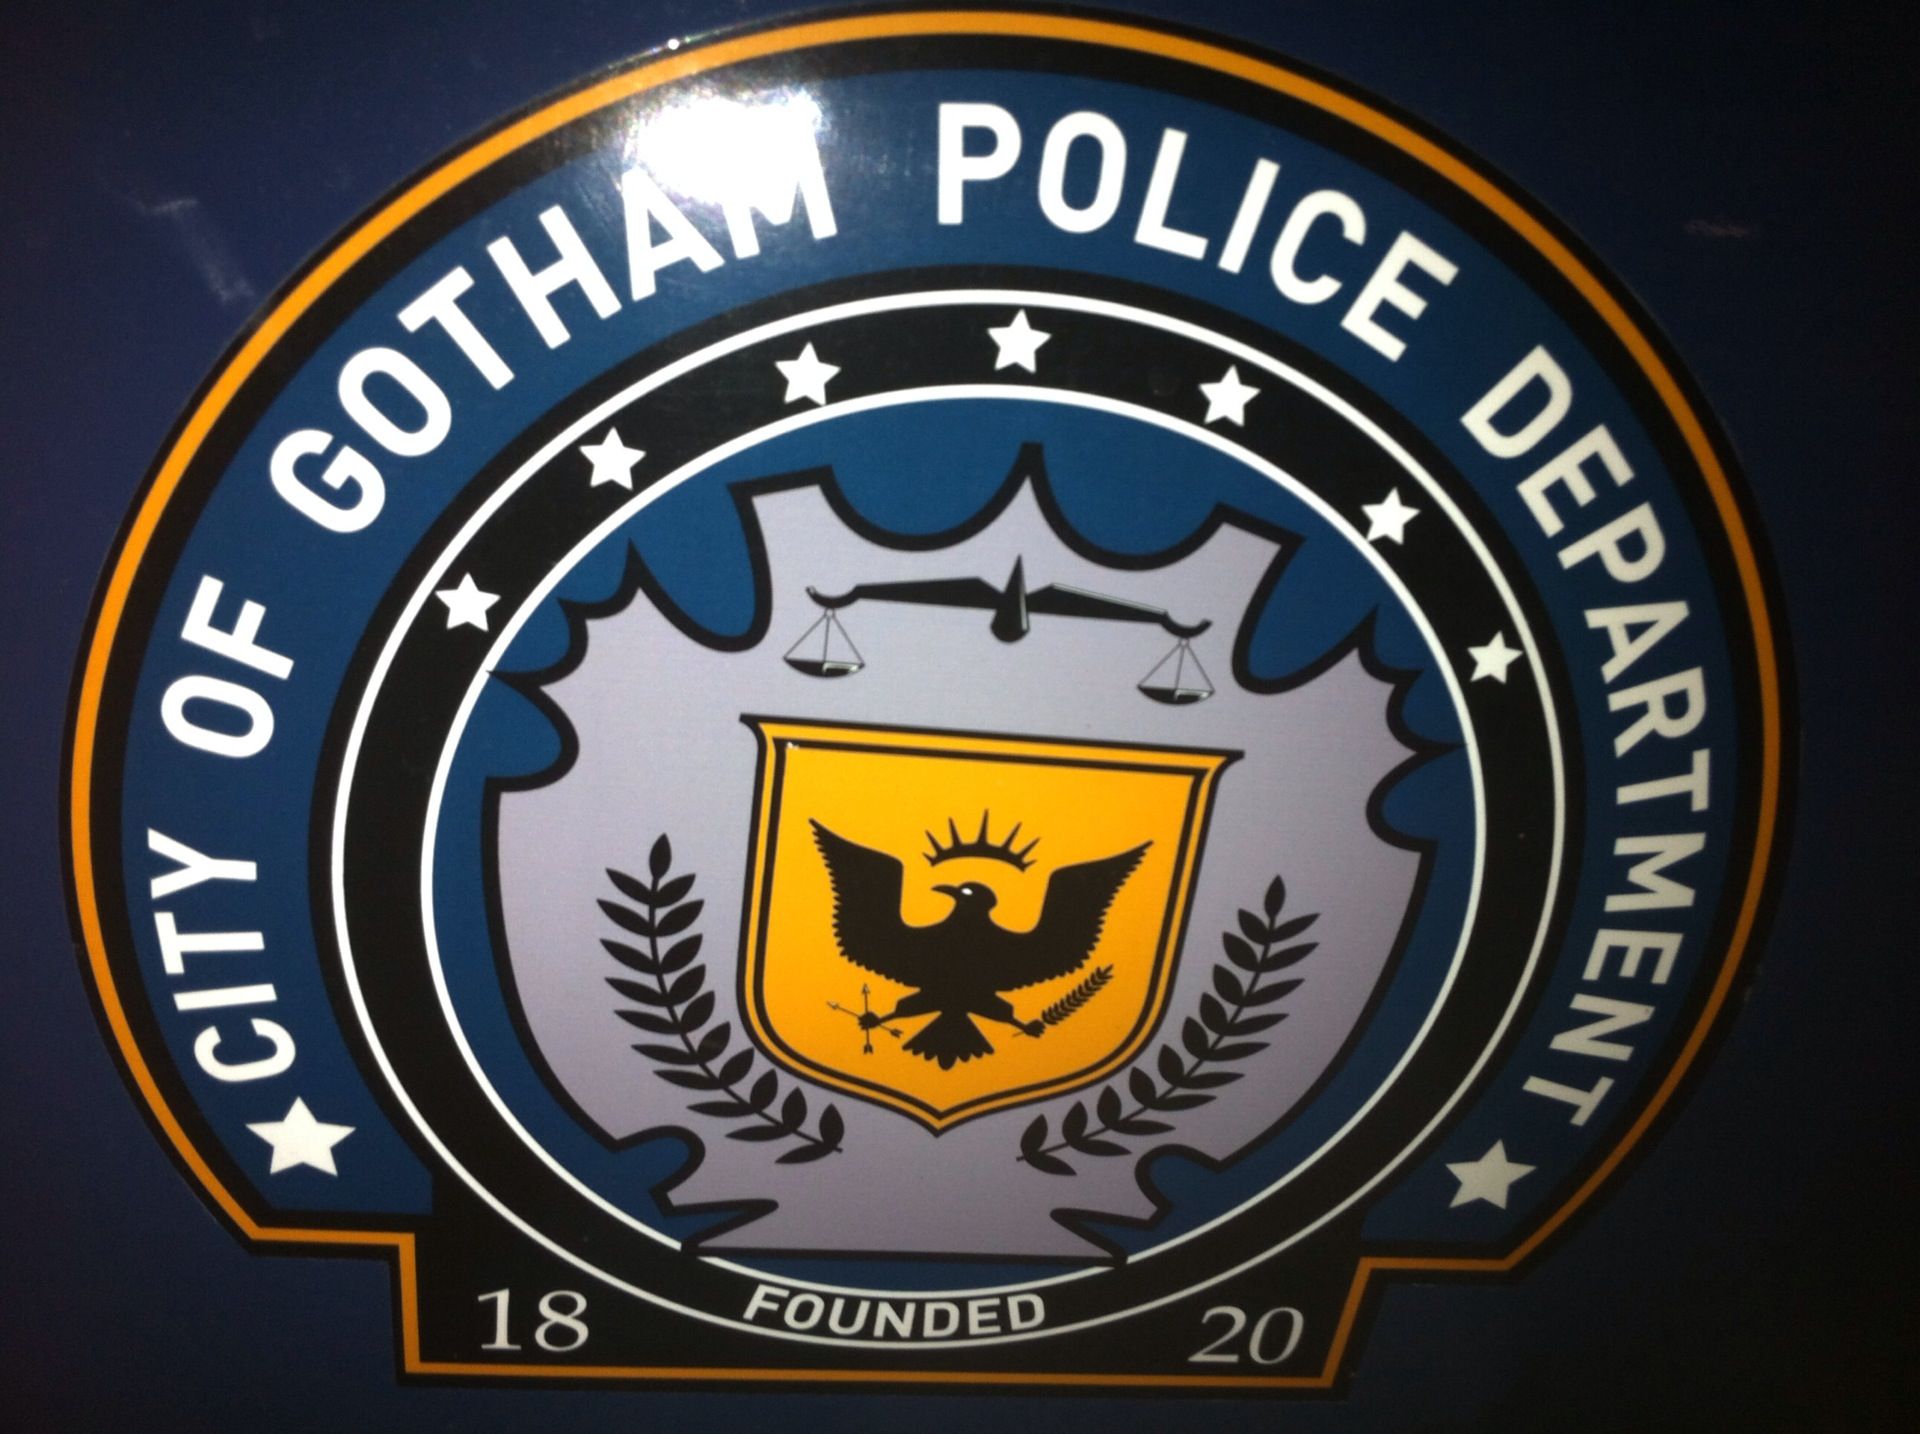 Gotham City Police Department Wallpaper. Department 56 Dickens Village Wallpaper, Fire Department Wallpaper and Grin Department Wallpaper